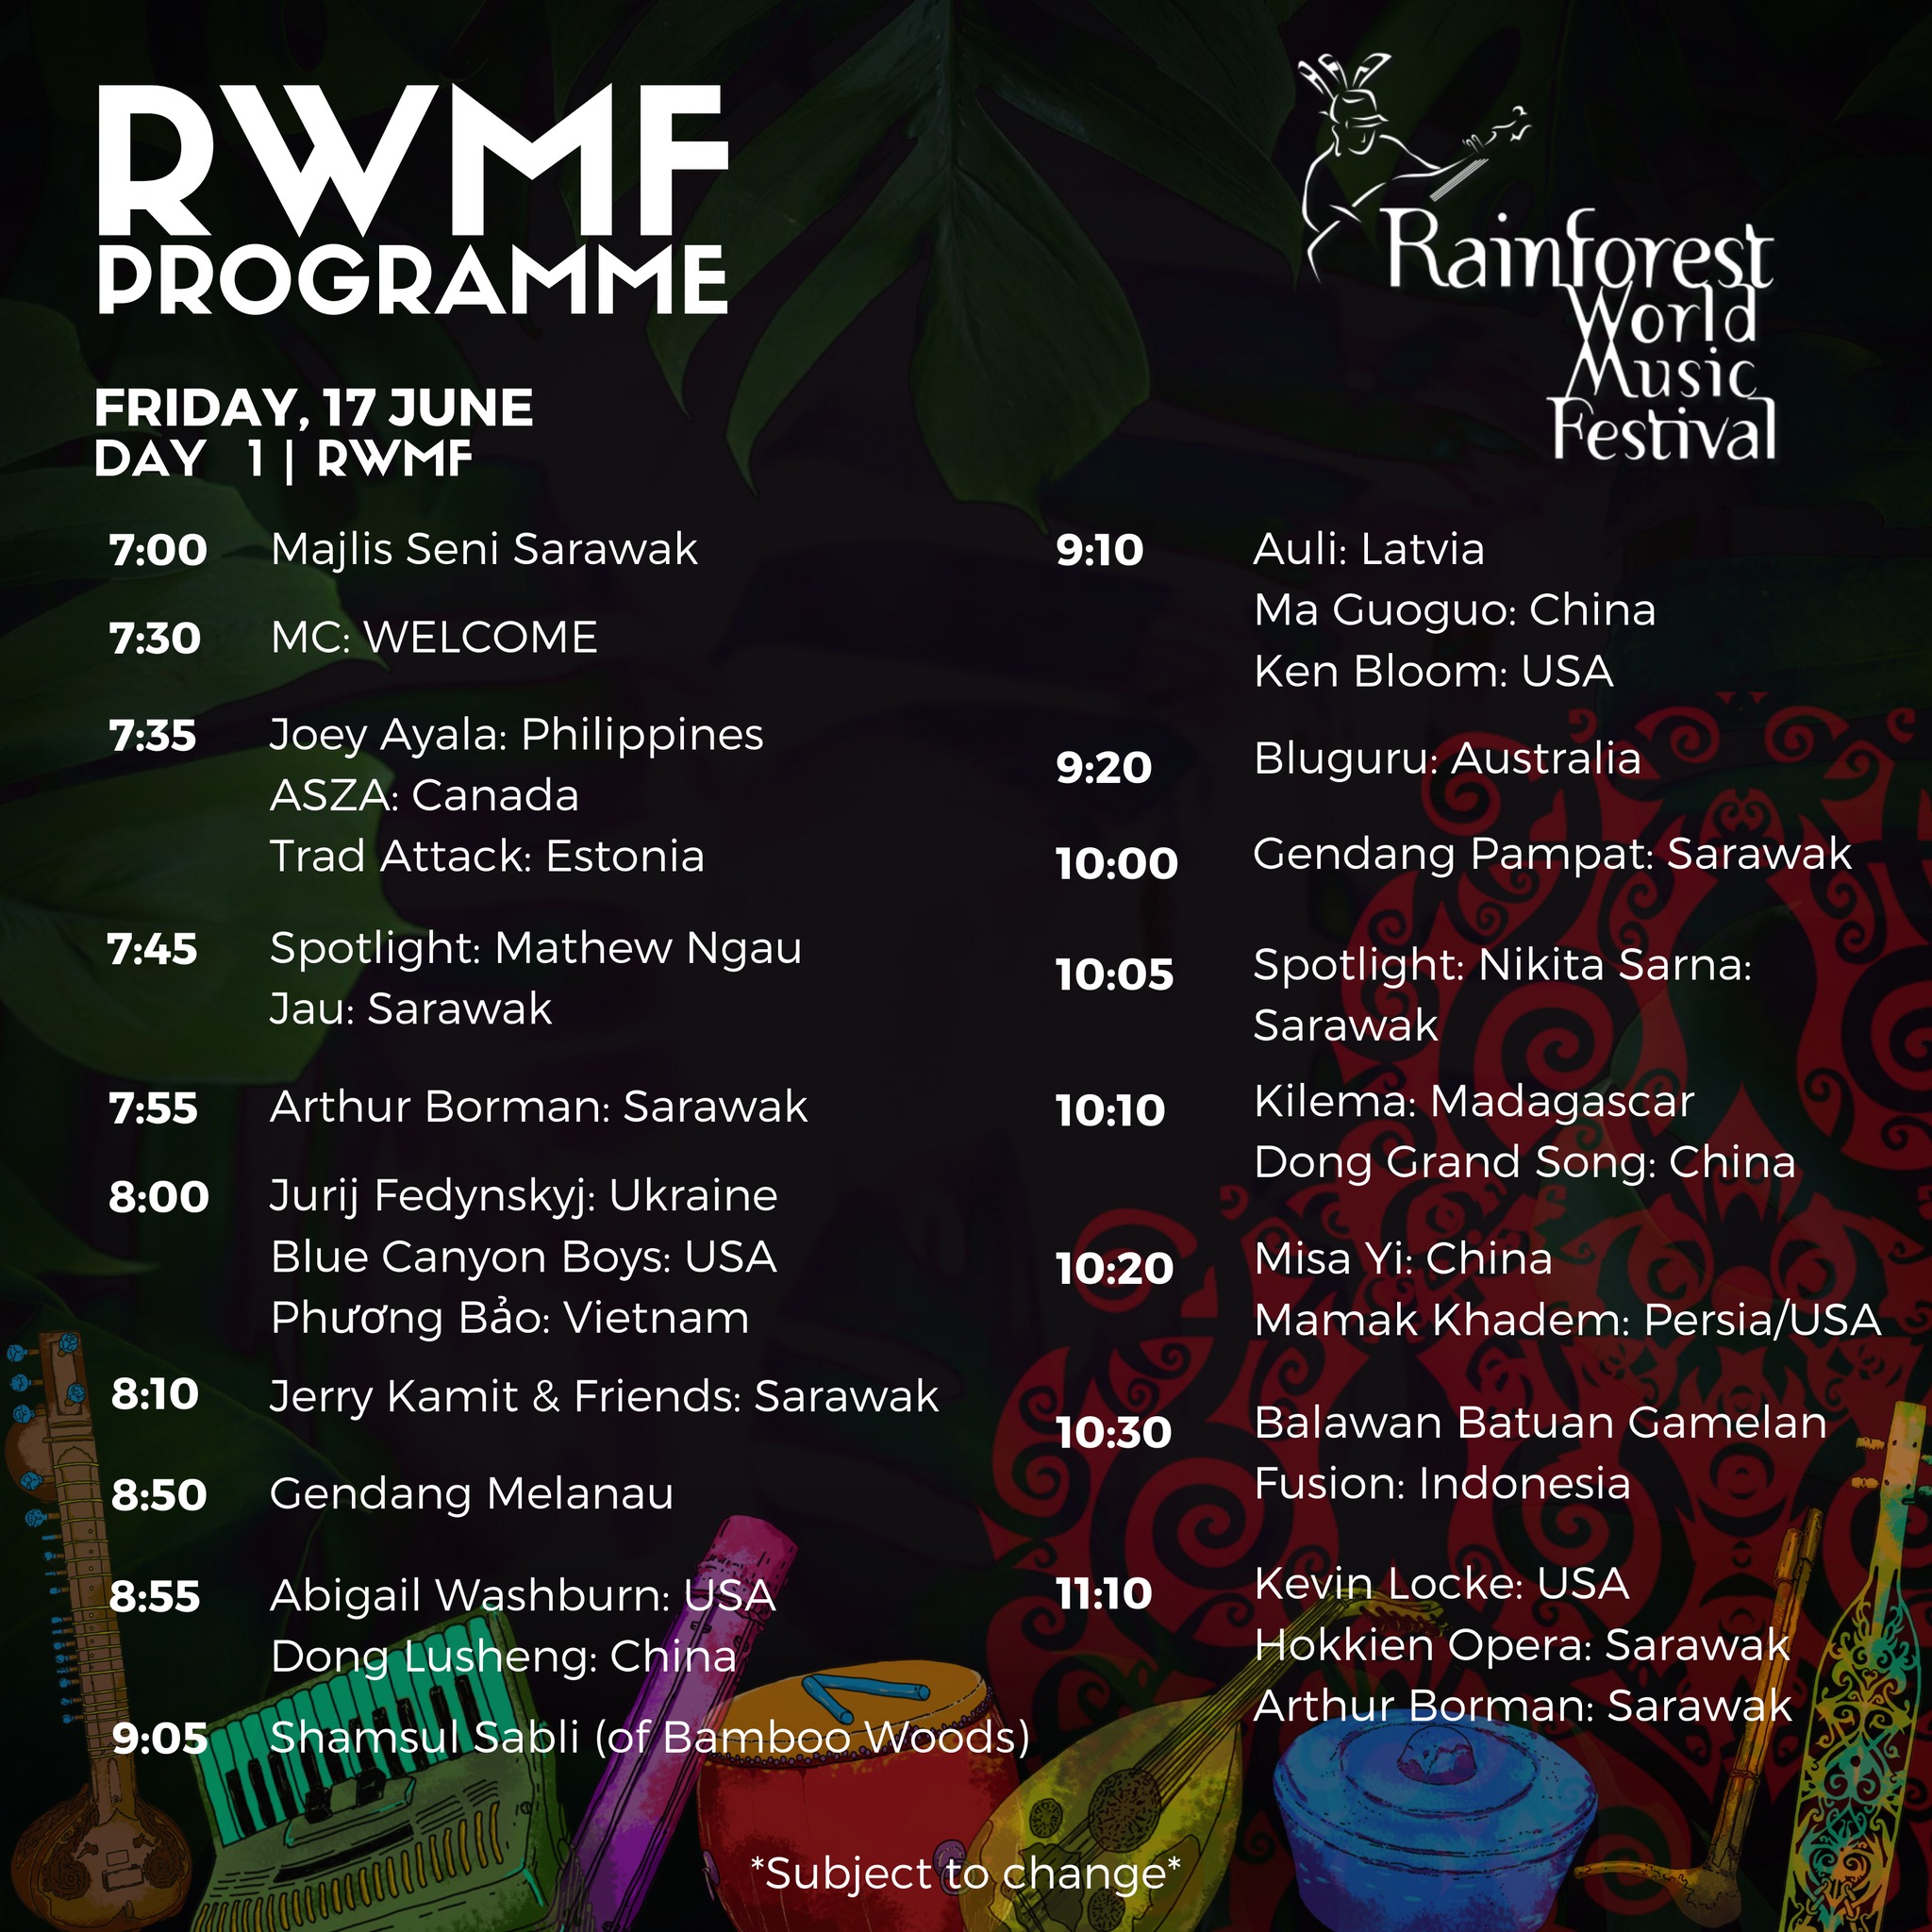 The Rainforest World Music Festival 2022 BRWMF DAY 1